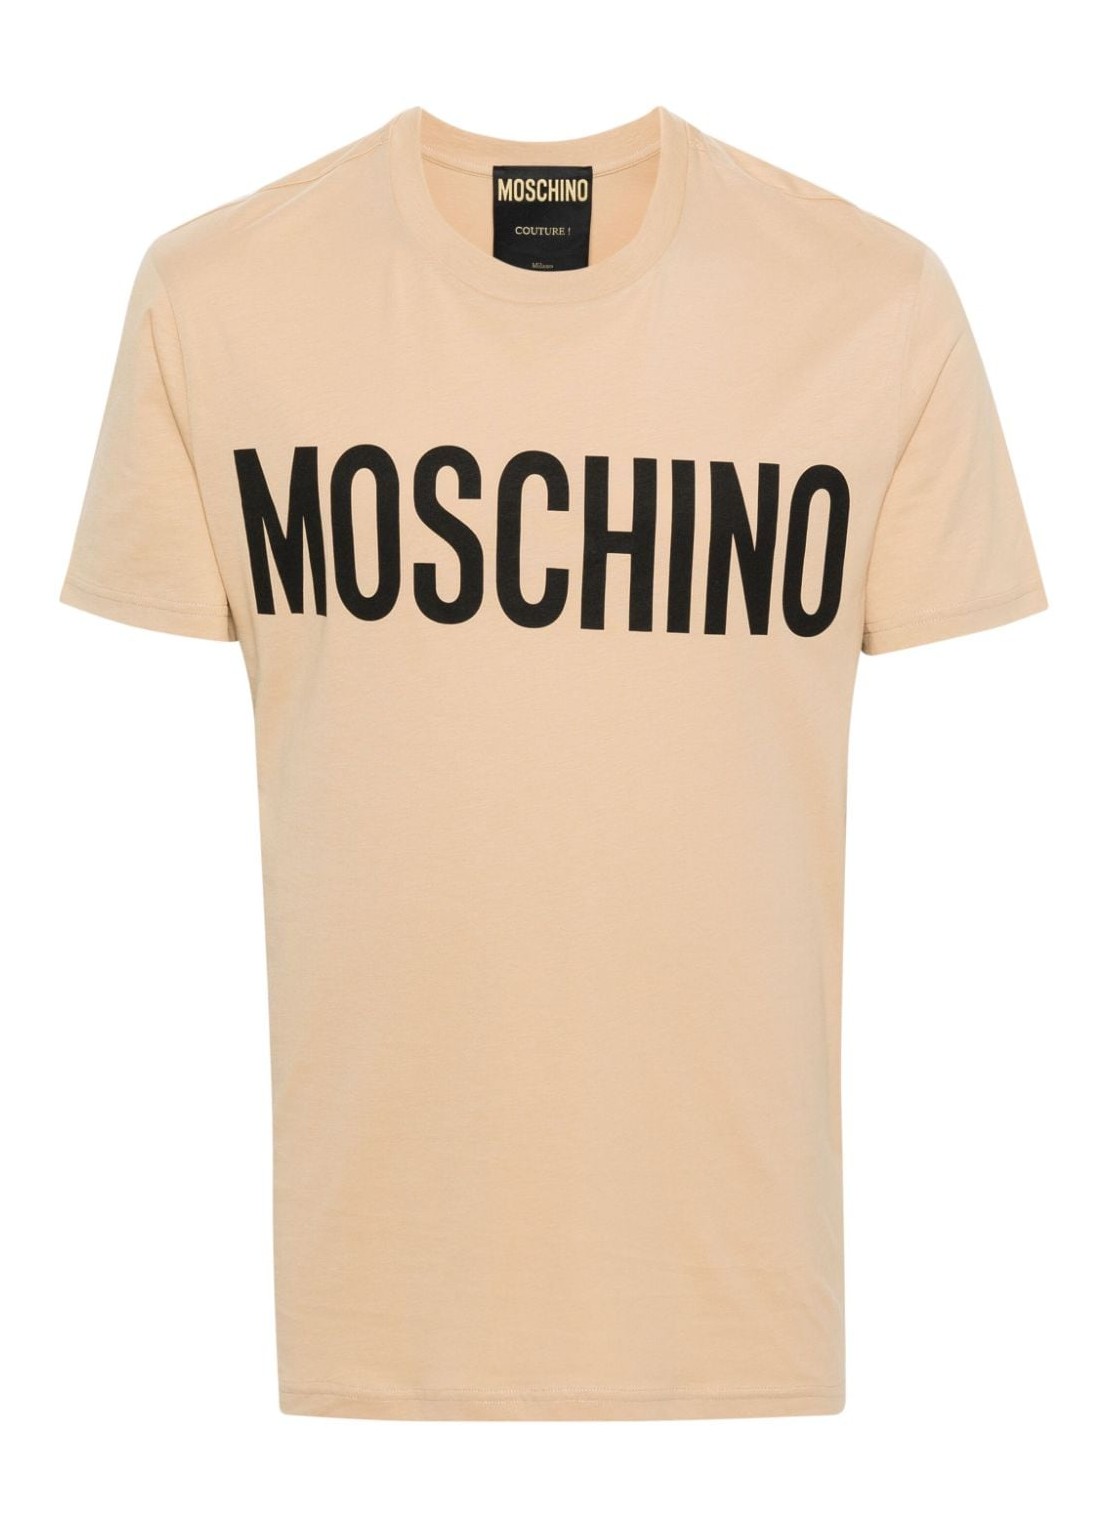 Camiseta moschino couture t-shirt man organic cotton jersey 07012041 a1148 talla 46
 